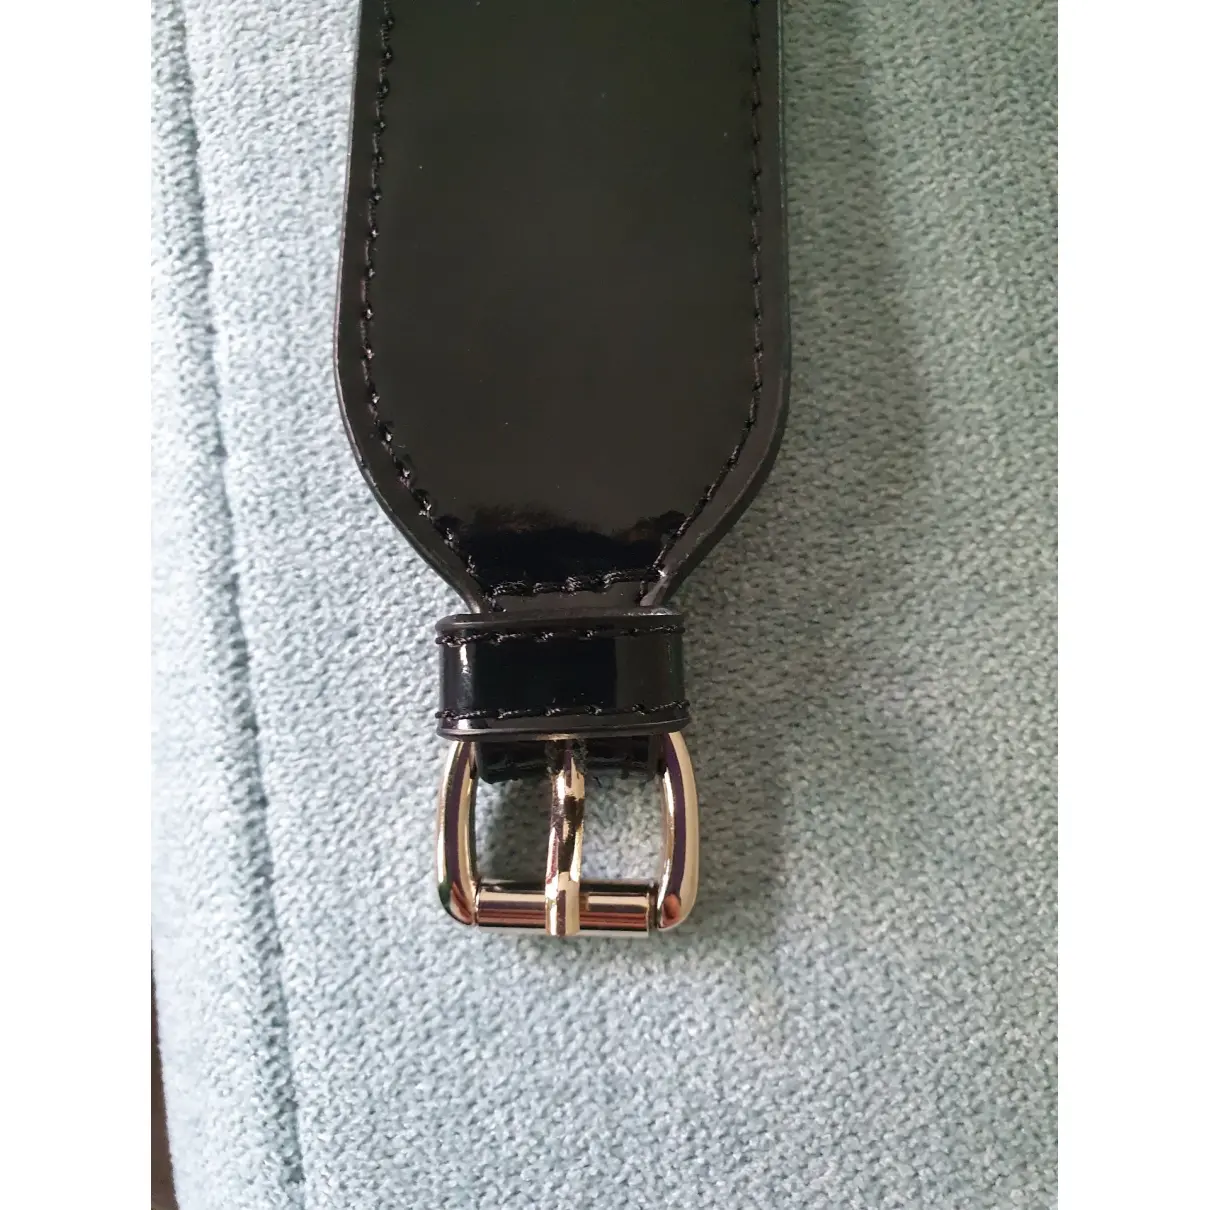 Leather belt Alannah Hill